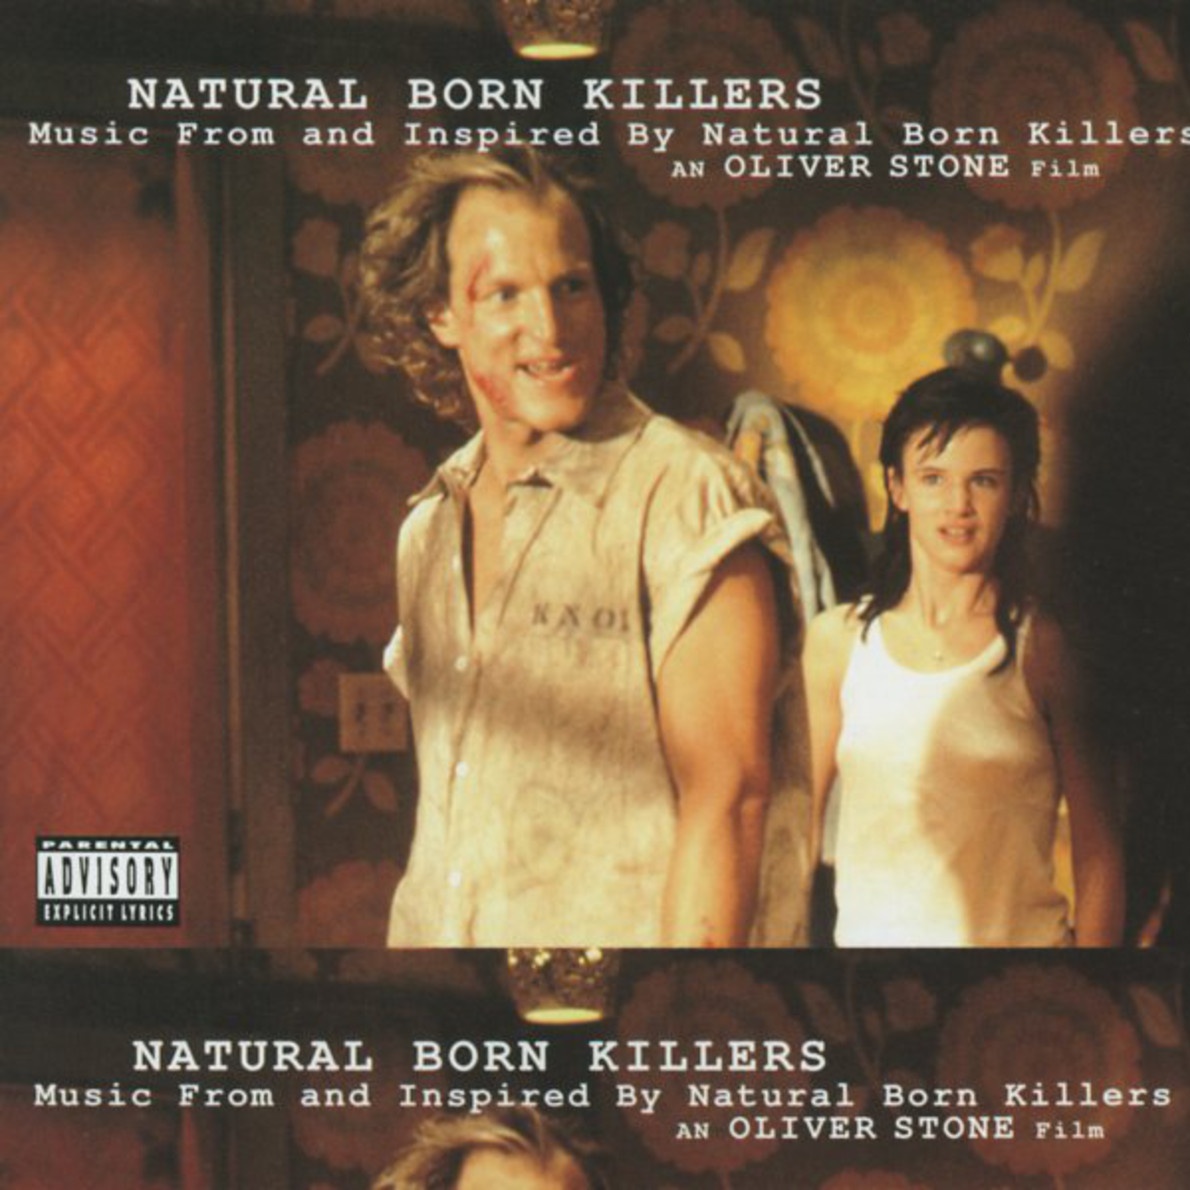 Born Bad - From "Natural Born Killers" Soundtrack